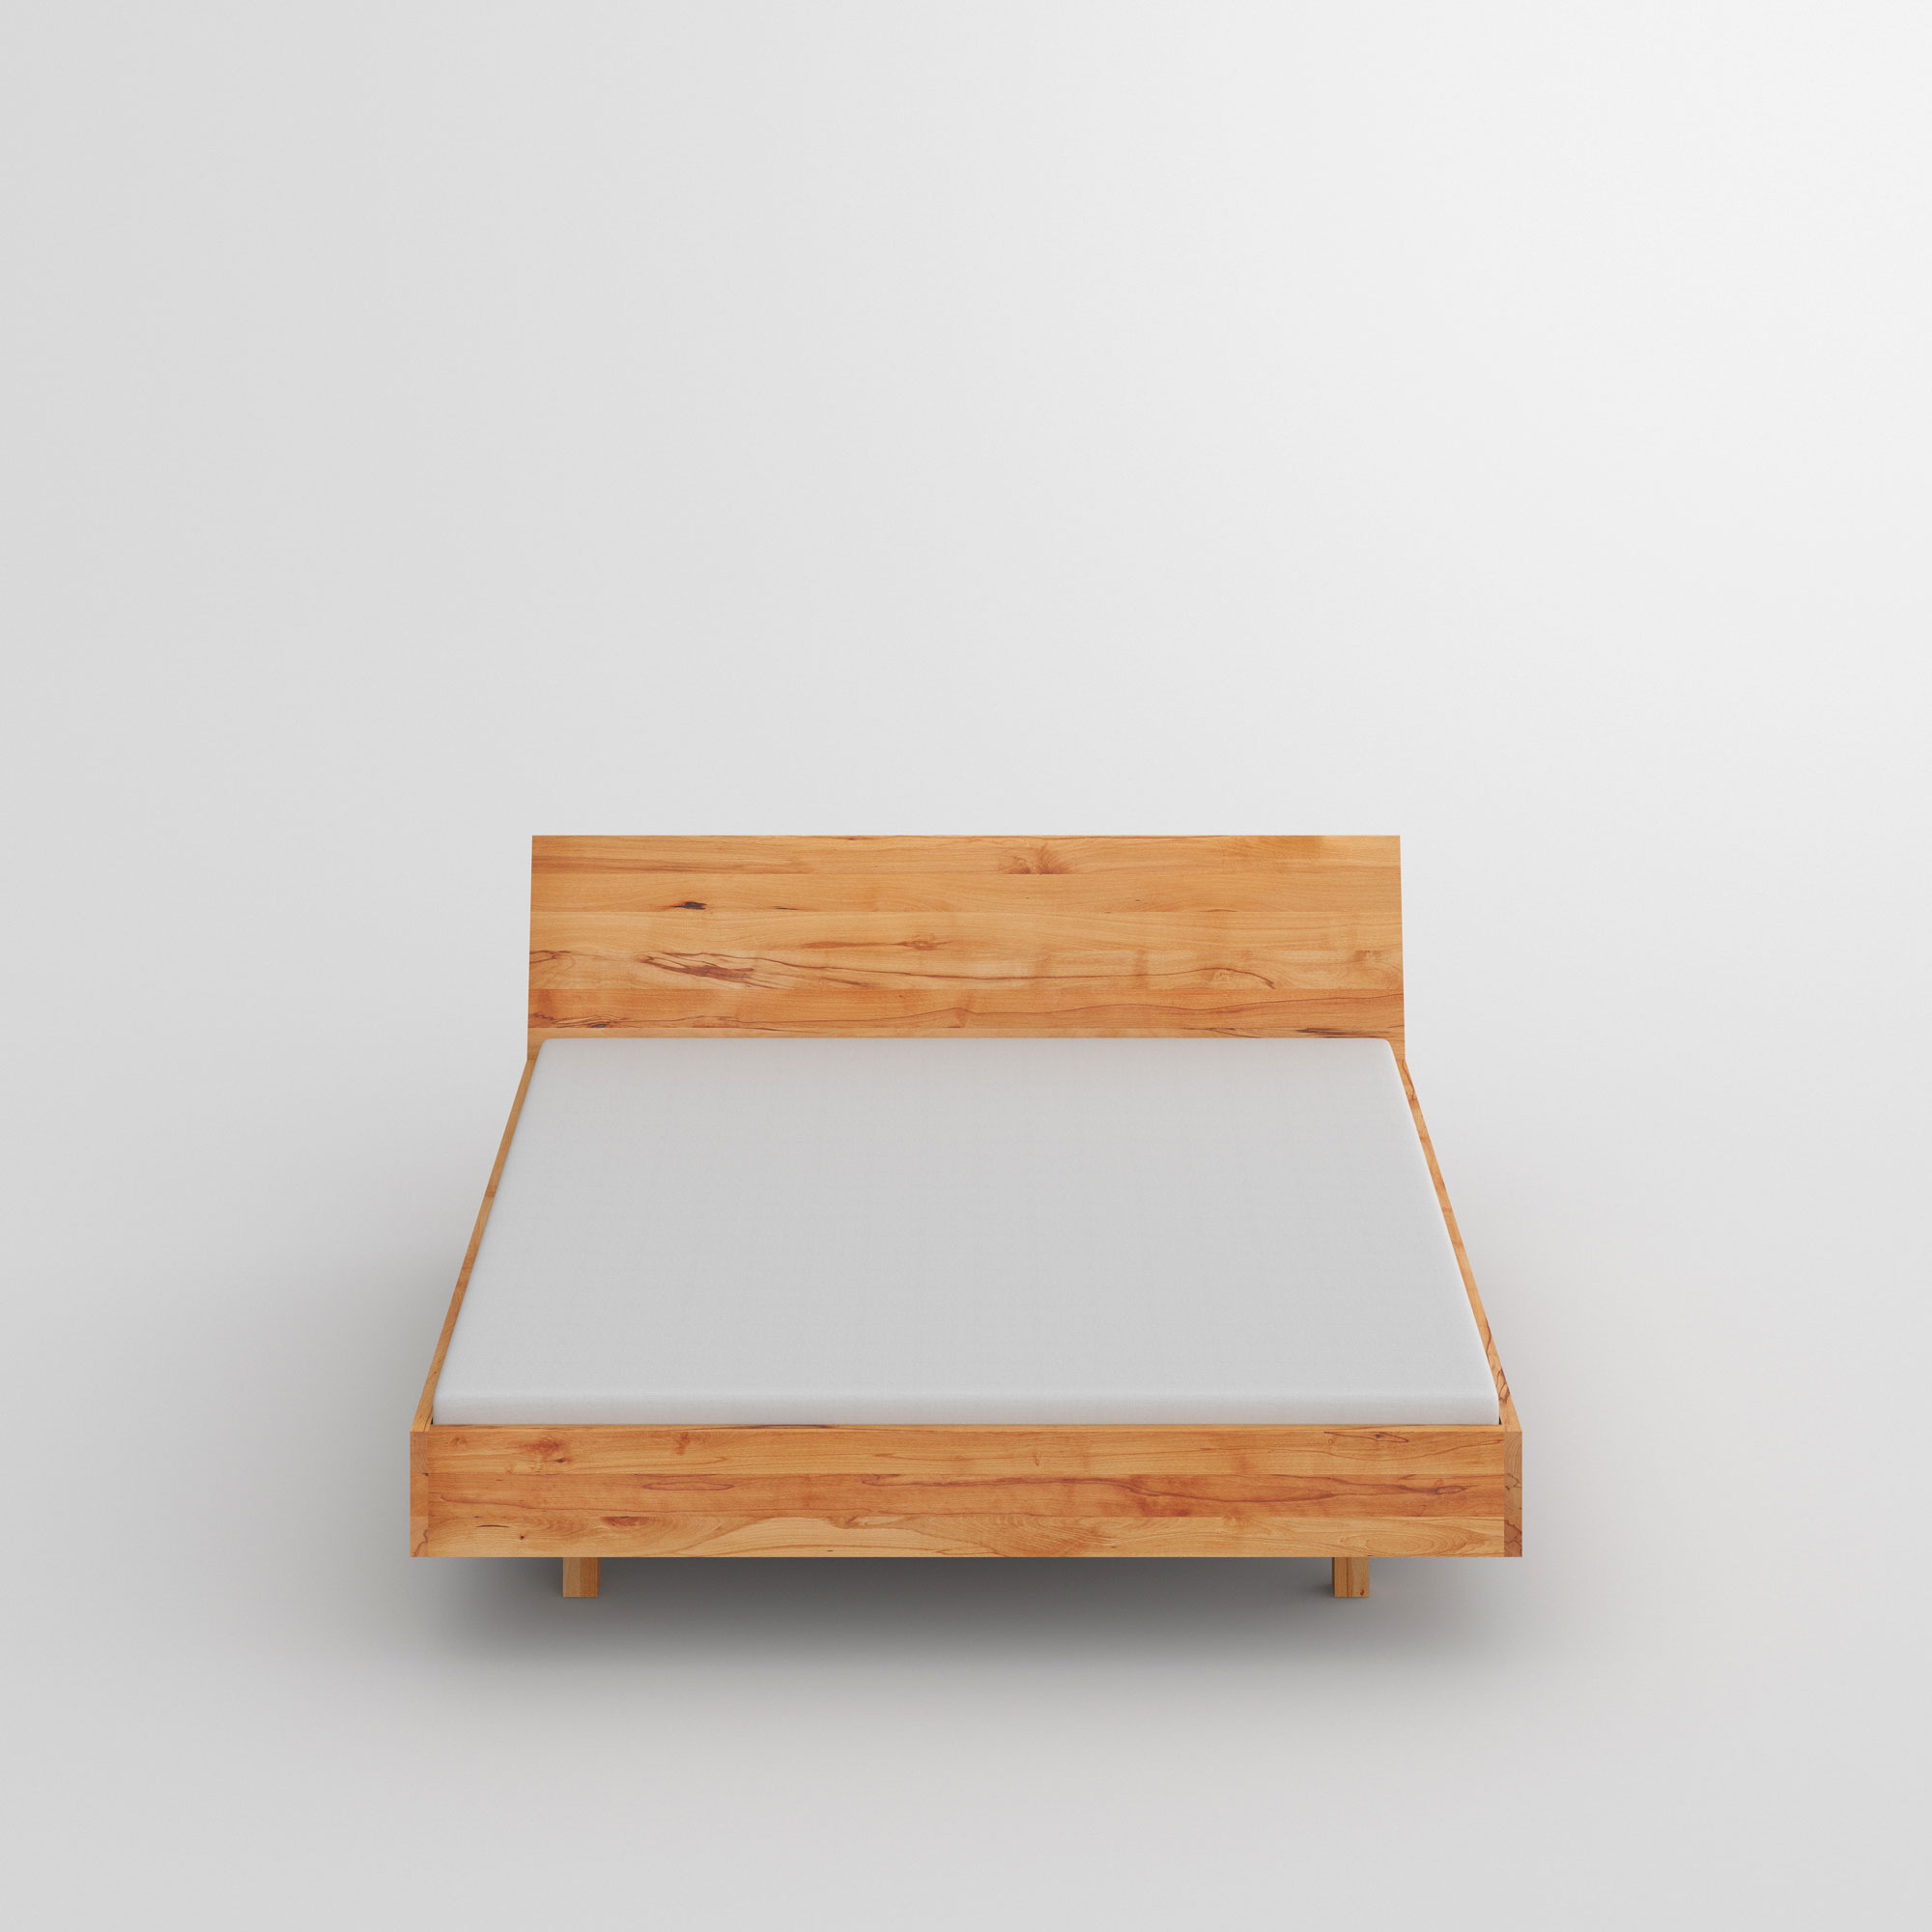 Design Bed QUADRA cam3 custom made in solid wood by vitamin design